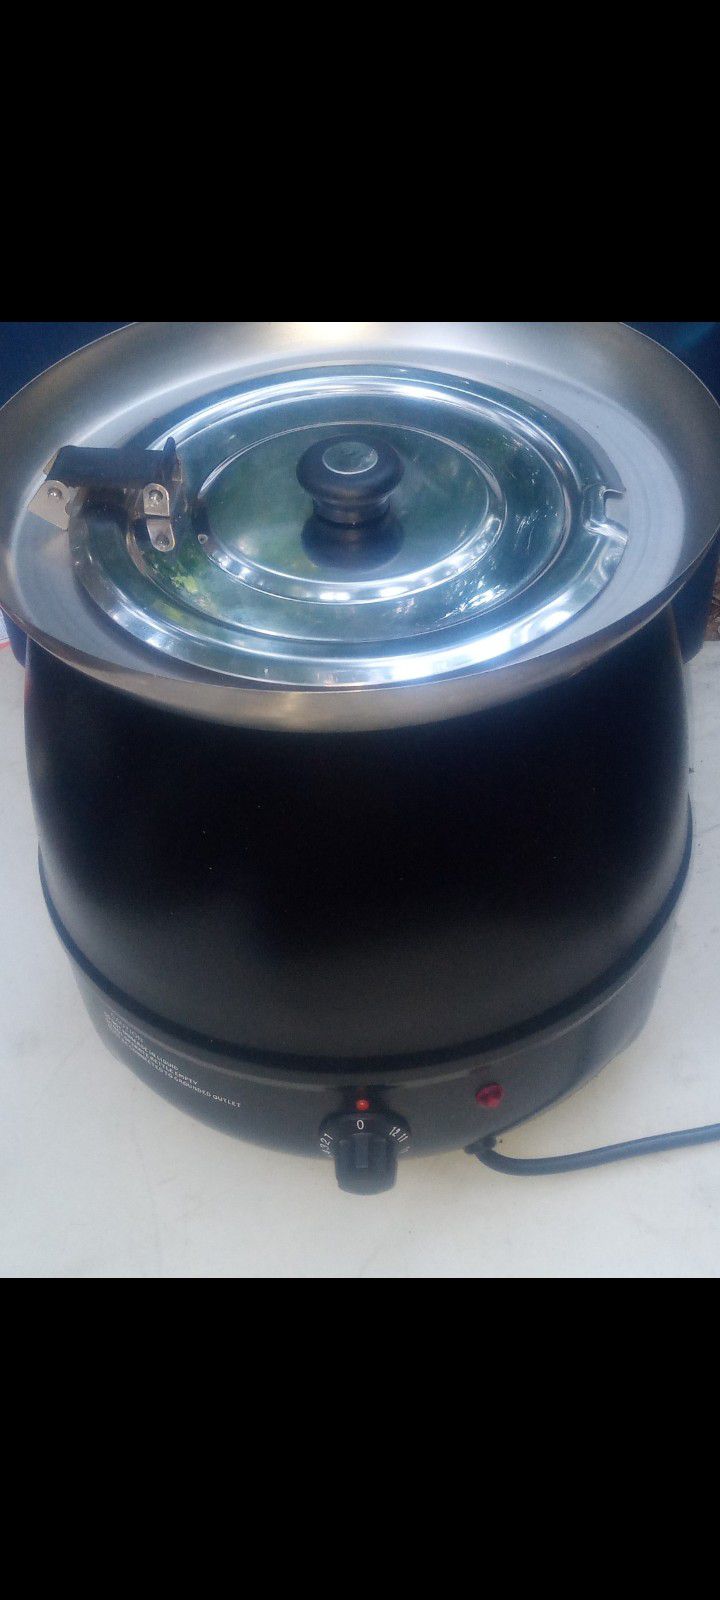 Avantco S30 11 Qt. Round Black Countertop Food / Soup Kettle Warmer - 120V, 400W

